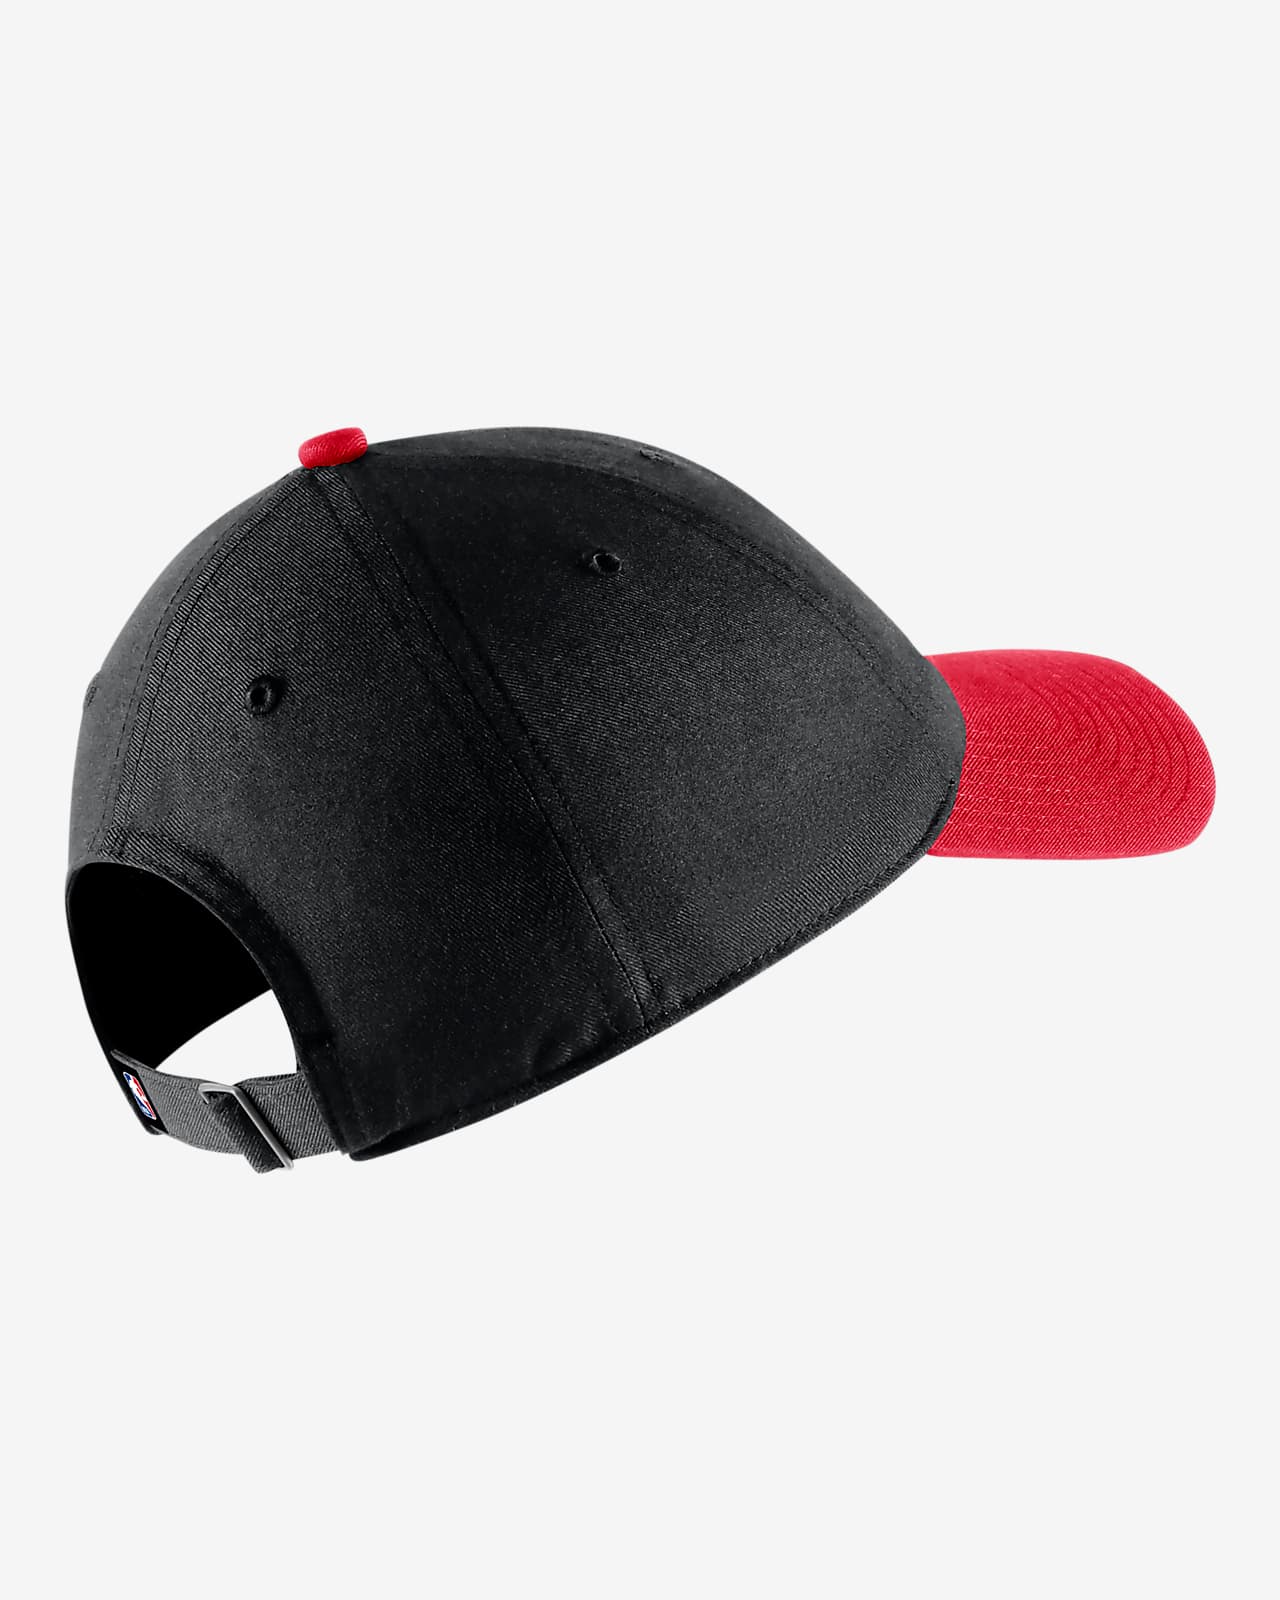 Chicago Bulls 2T XL-LOGO SNAPBACK Black-Red Adjustable Hat